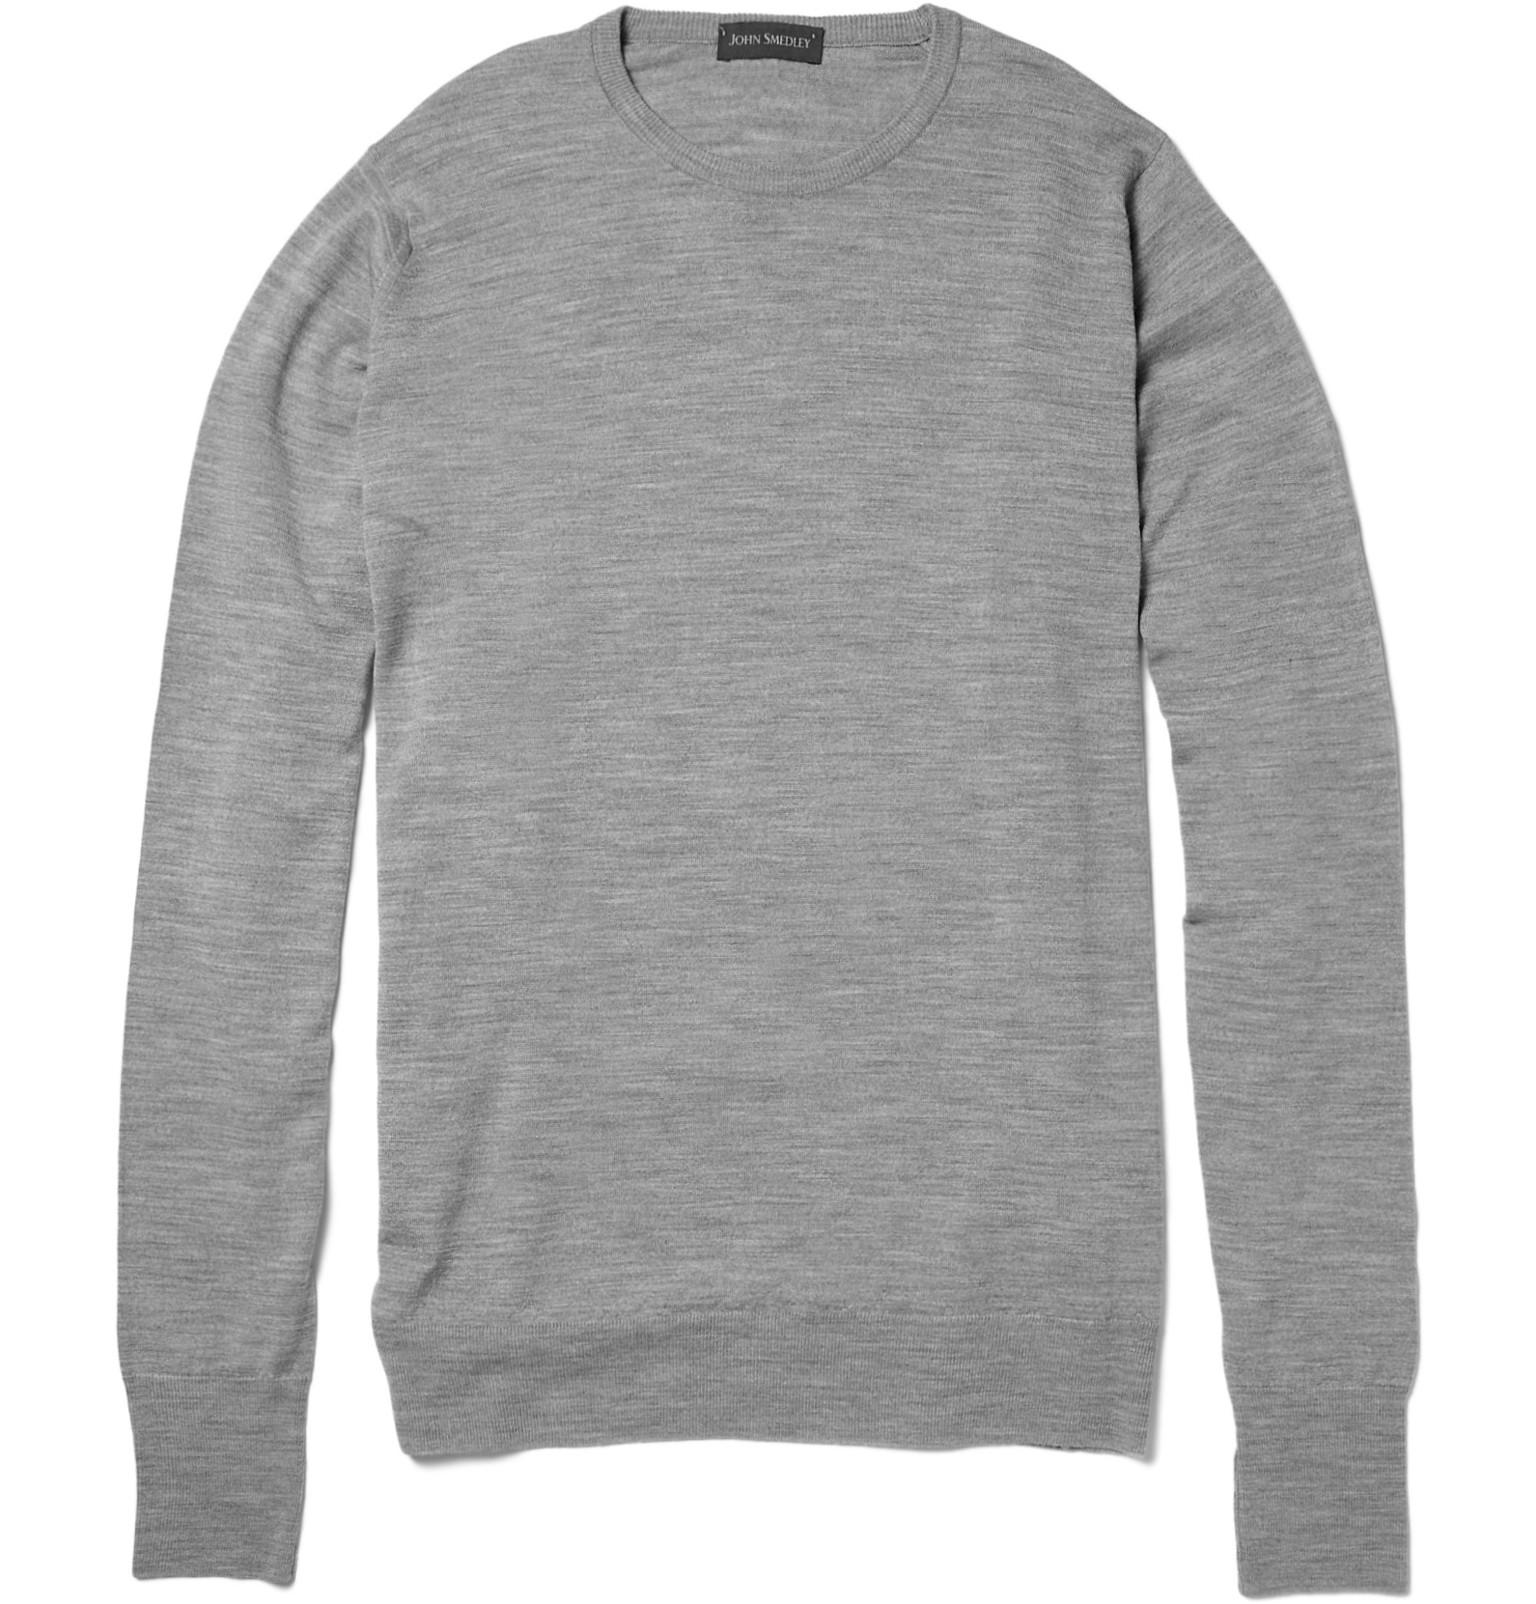 John Smedley Marcus Crew Neck Merino Wool Sweater in Gray for Men - Lyst